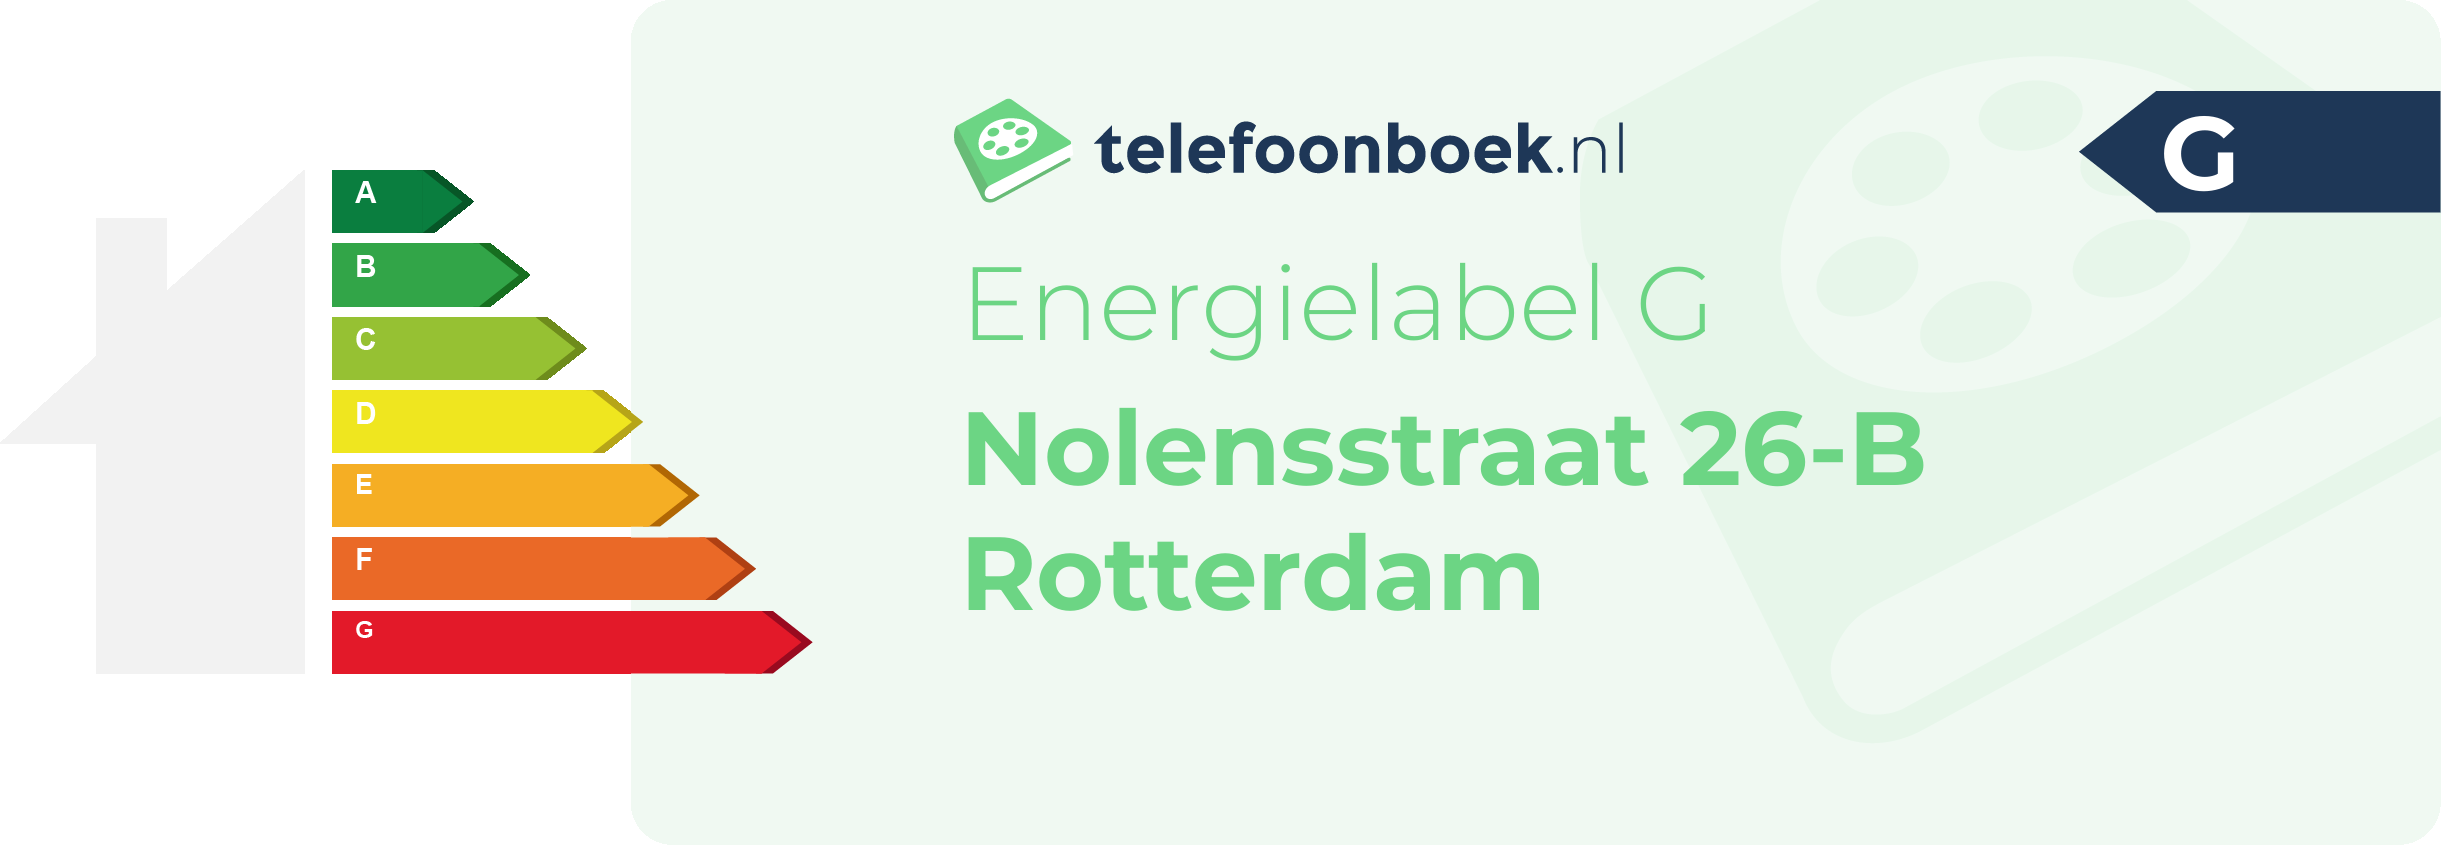 Energielabel Nolensstraat 26-B Rotterdam